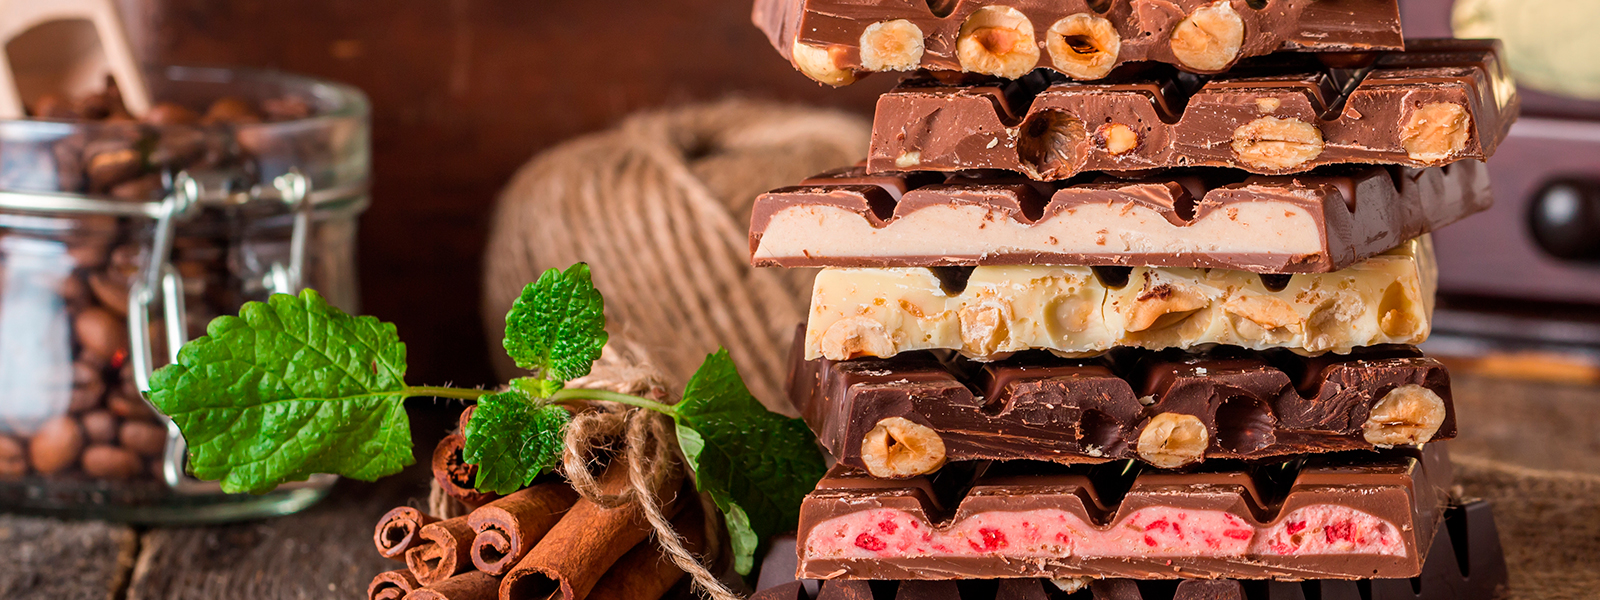 banner-carino-ingredientes-chocolate-rellenos-inclusiones-productos